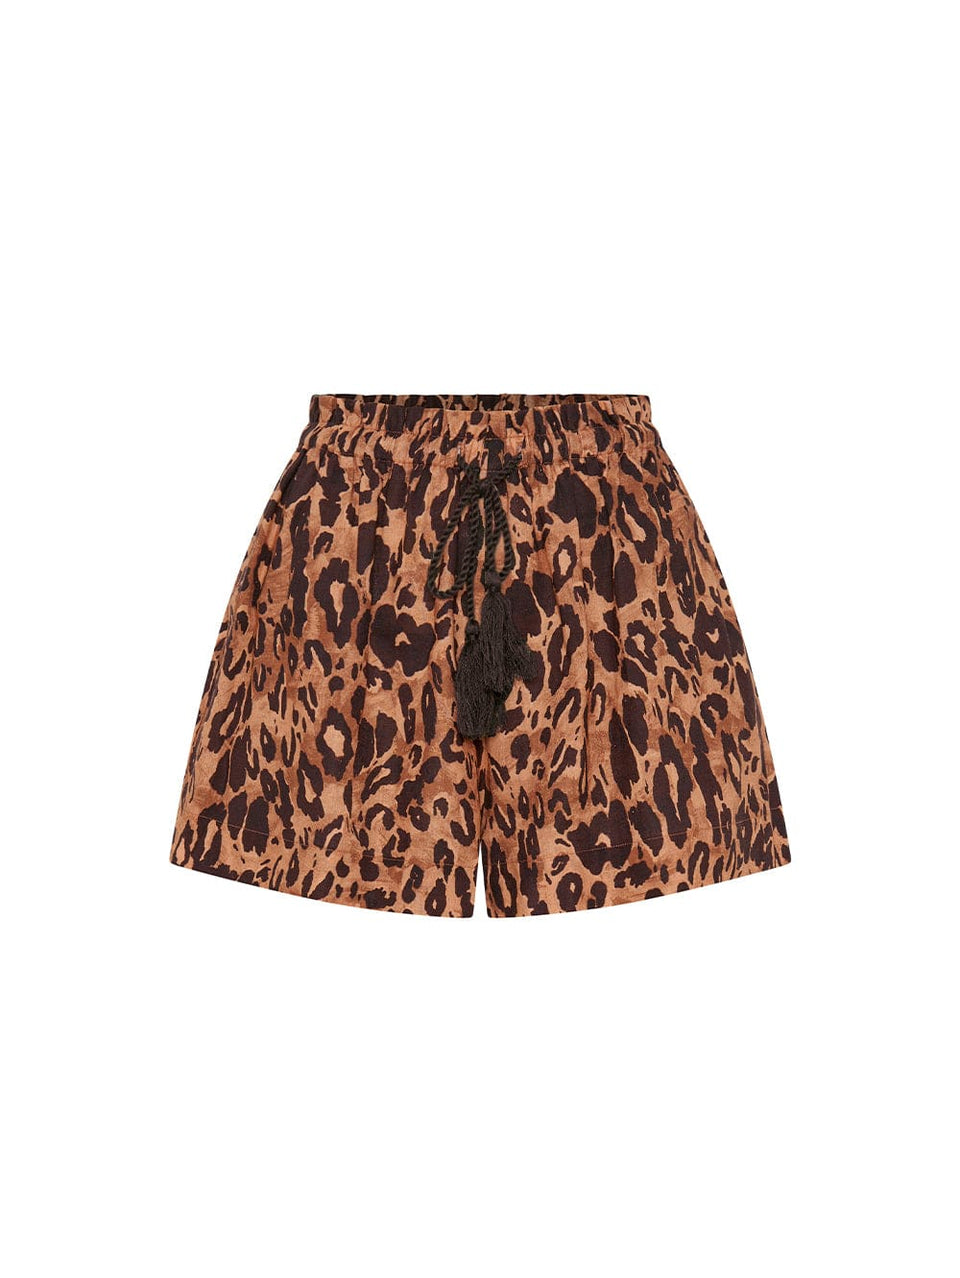 Madison Short KIVARI | Orange and brown leopard short